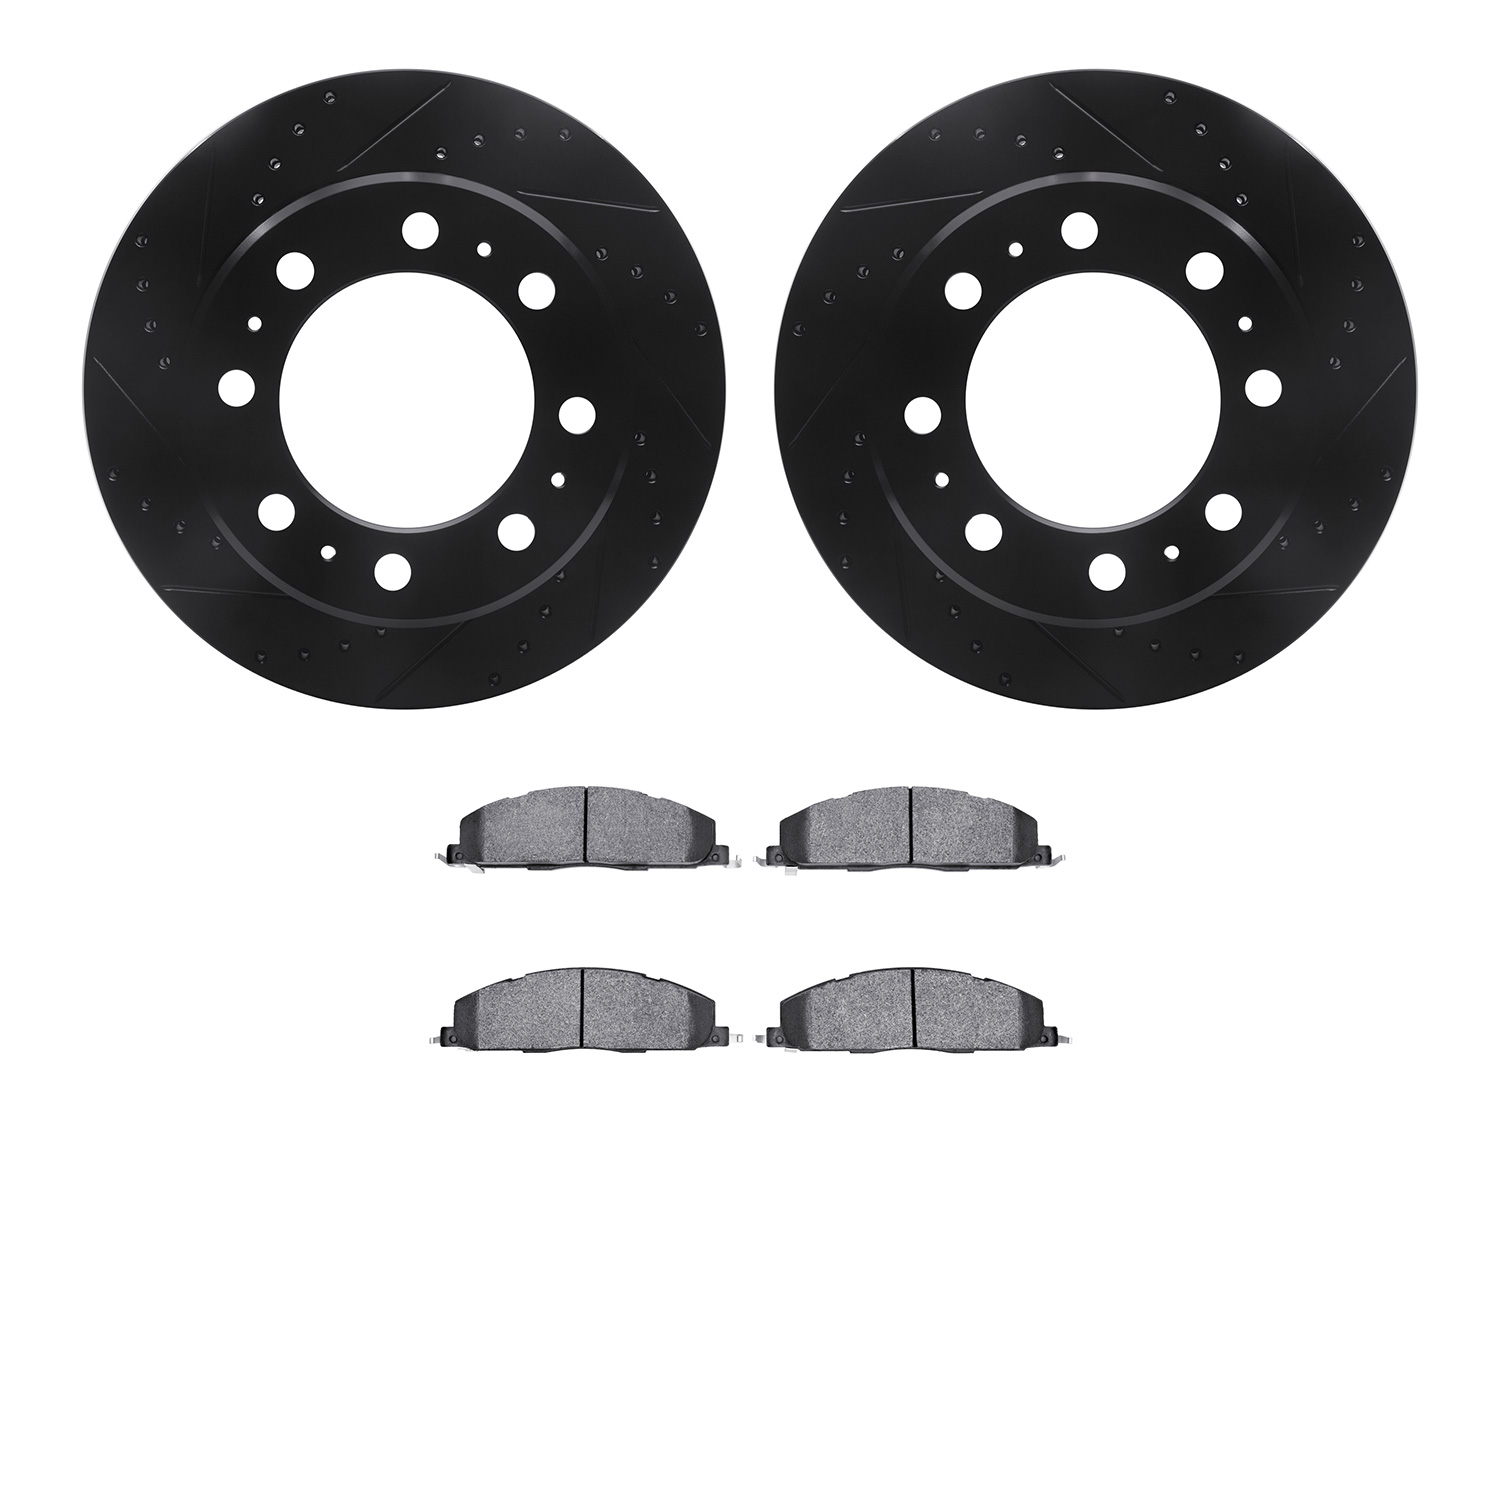 8402-40025 Drilled/Slotted Brake Rotors with Ultimate-Duty Brake Pads Kit [Black], 2009-2018 Mopar, Position: Rear